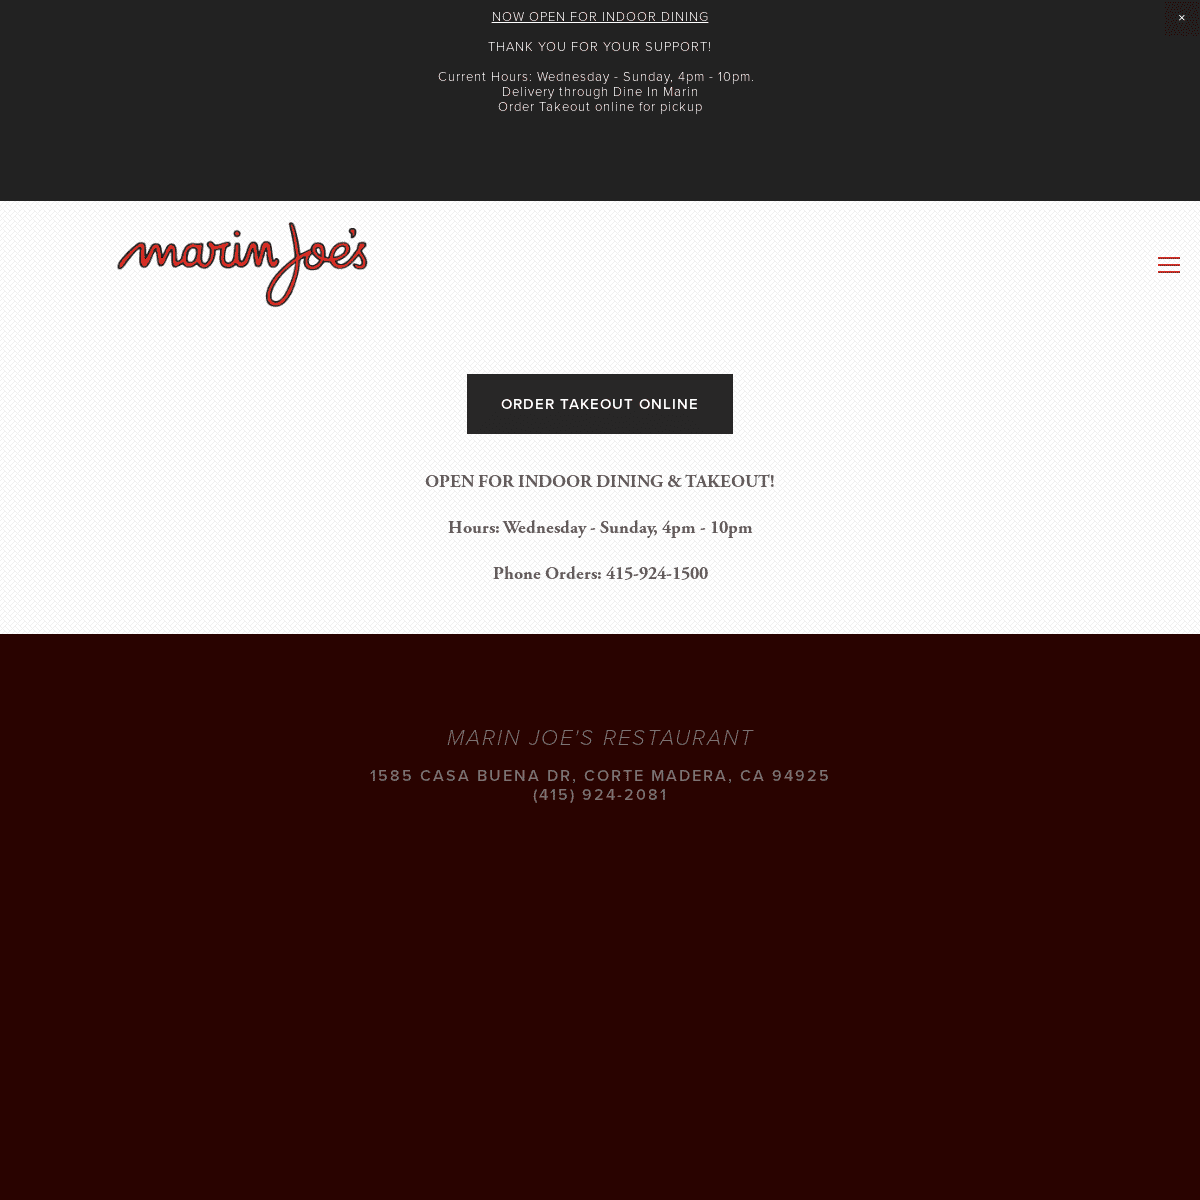 A complete backup of https://marinjoesrestaurant.com